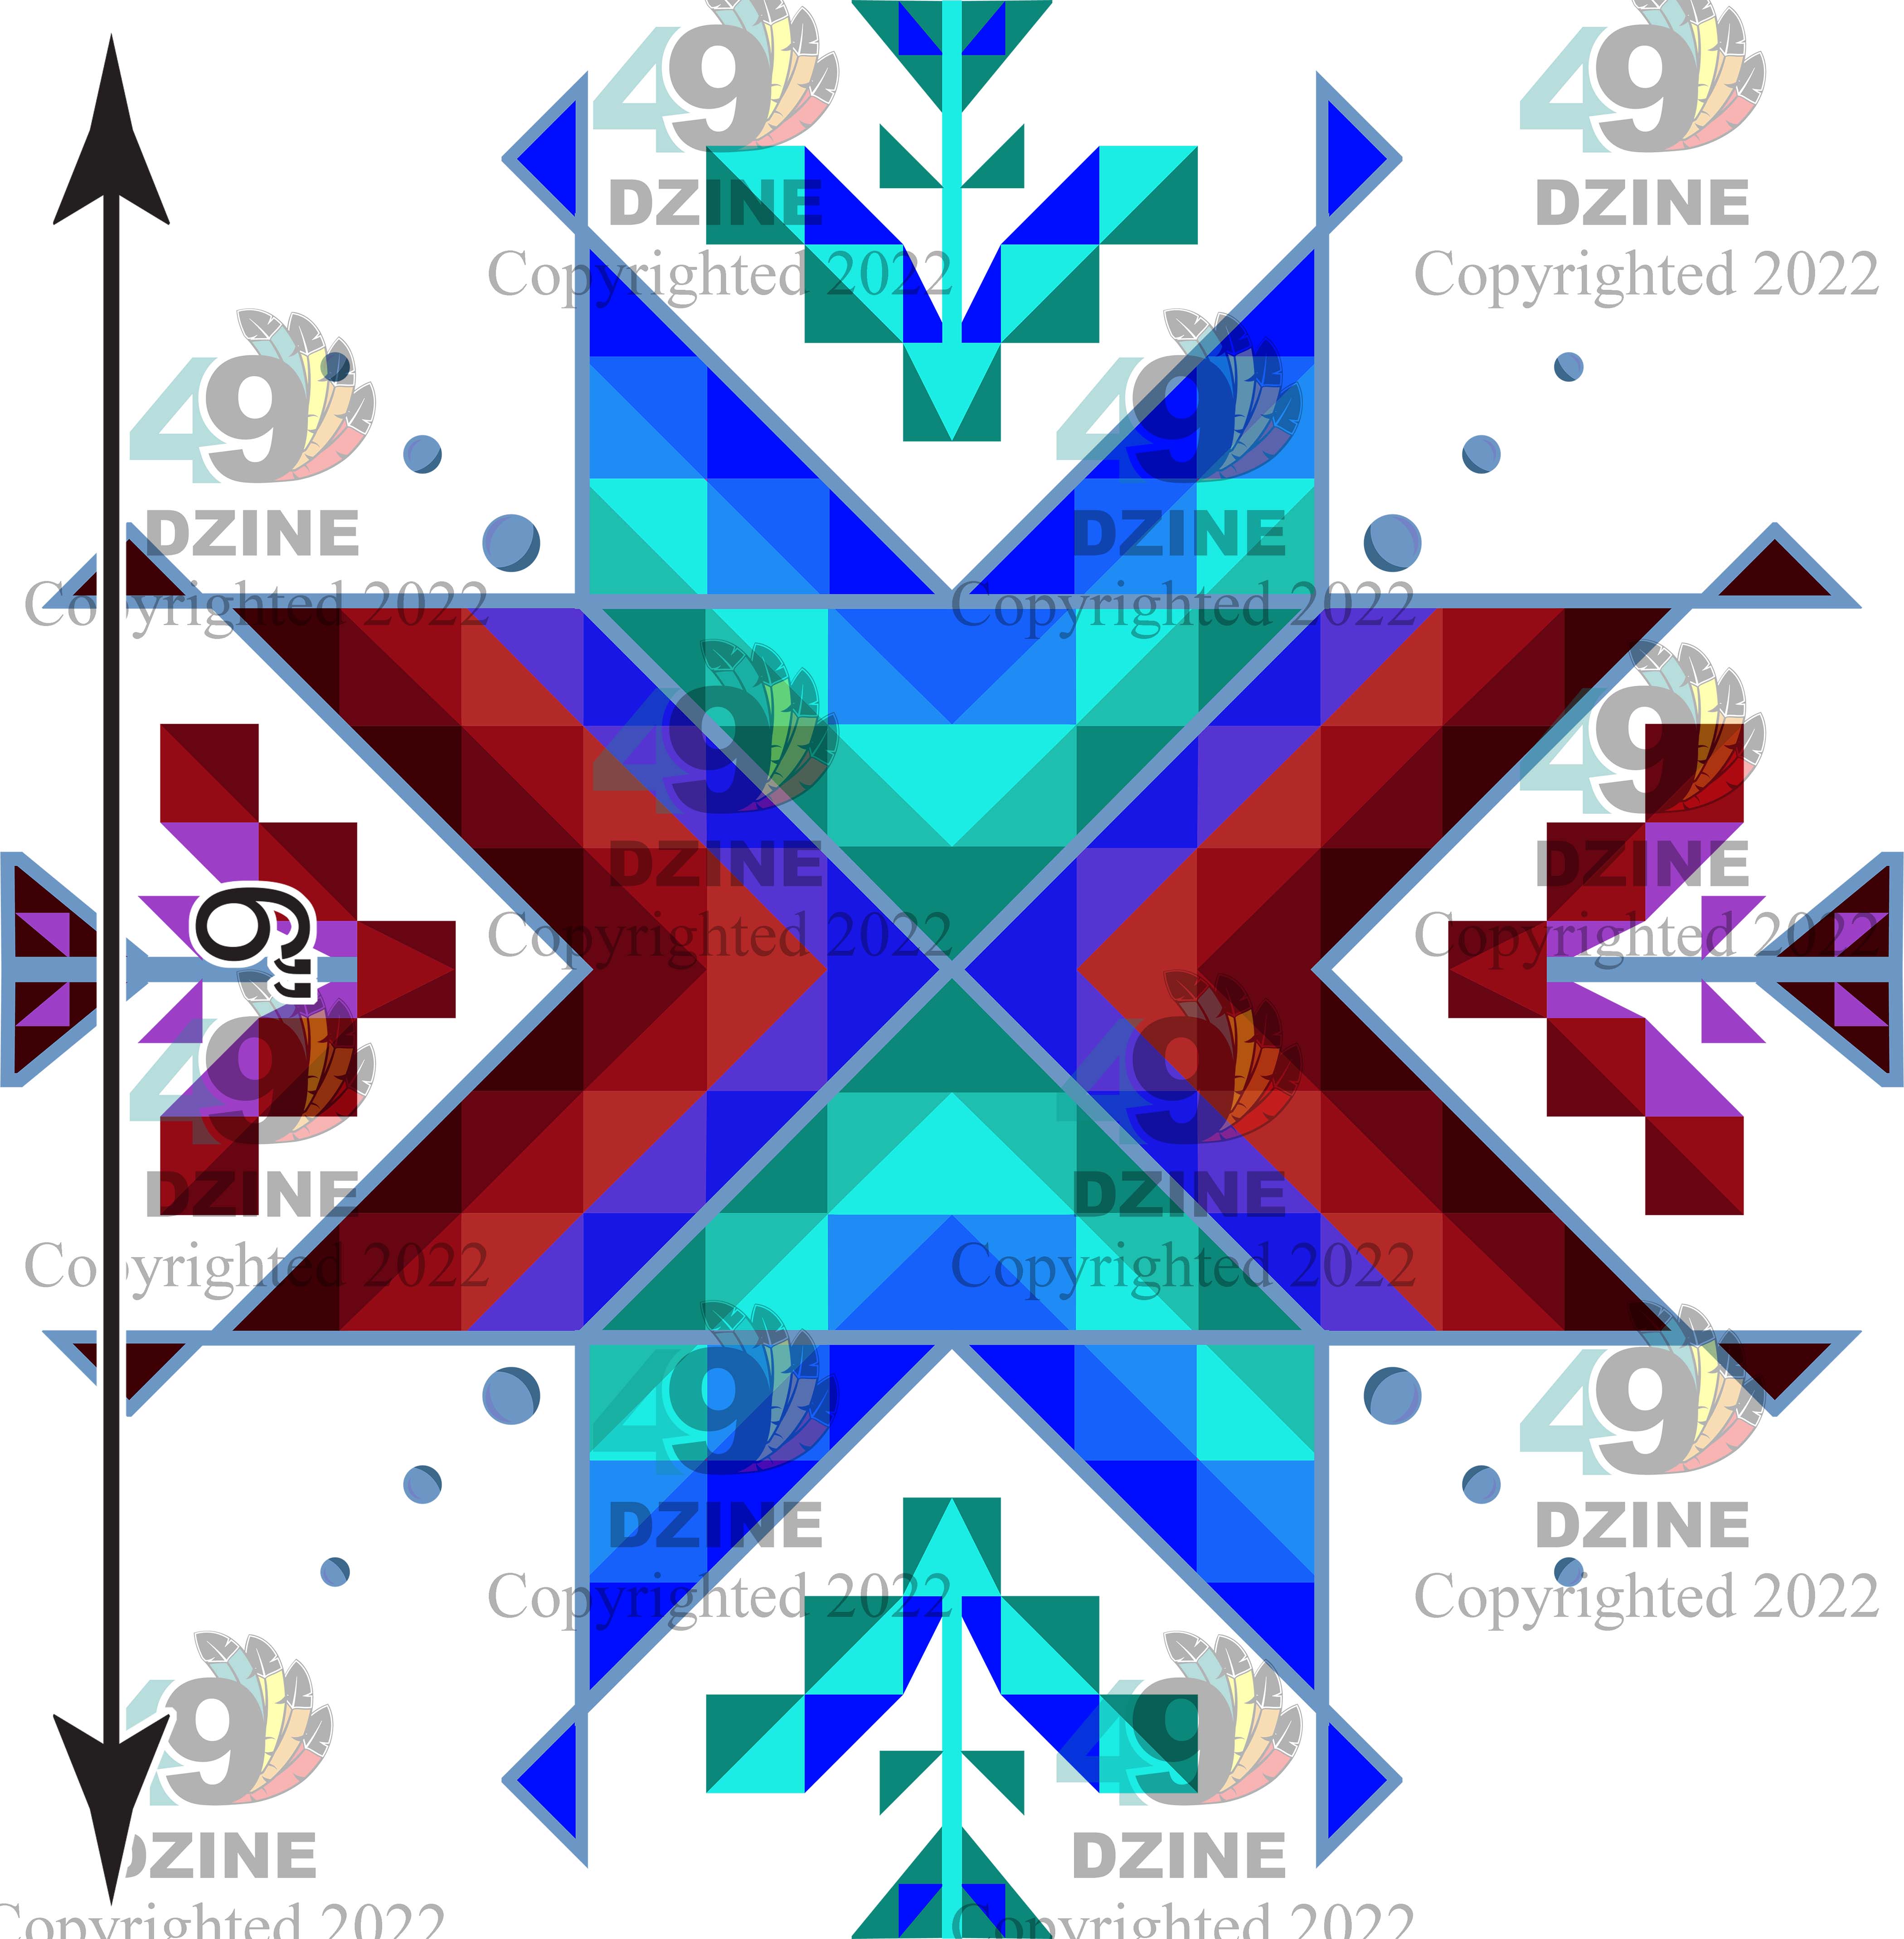 6-inch Geometric Transfer Dream of the Ancestors Transfers 49 Dzine 